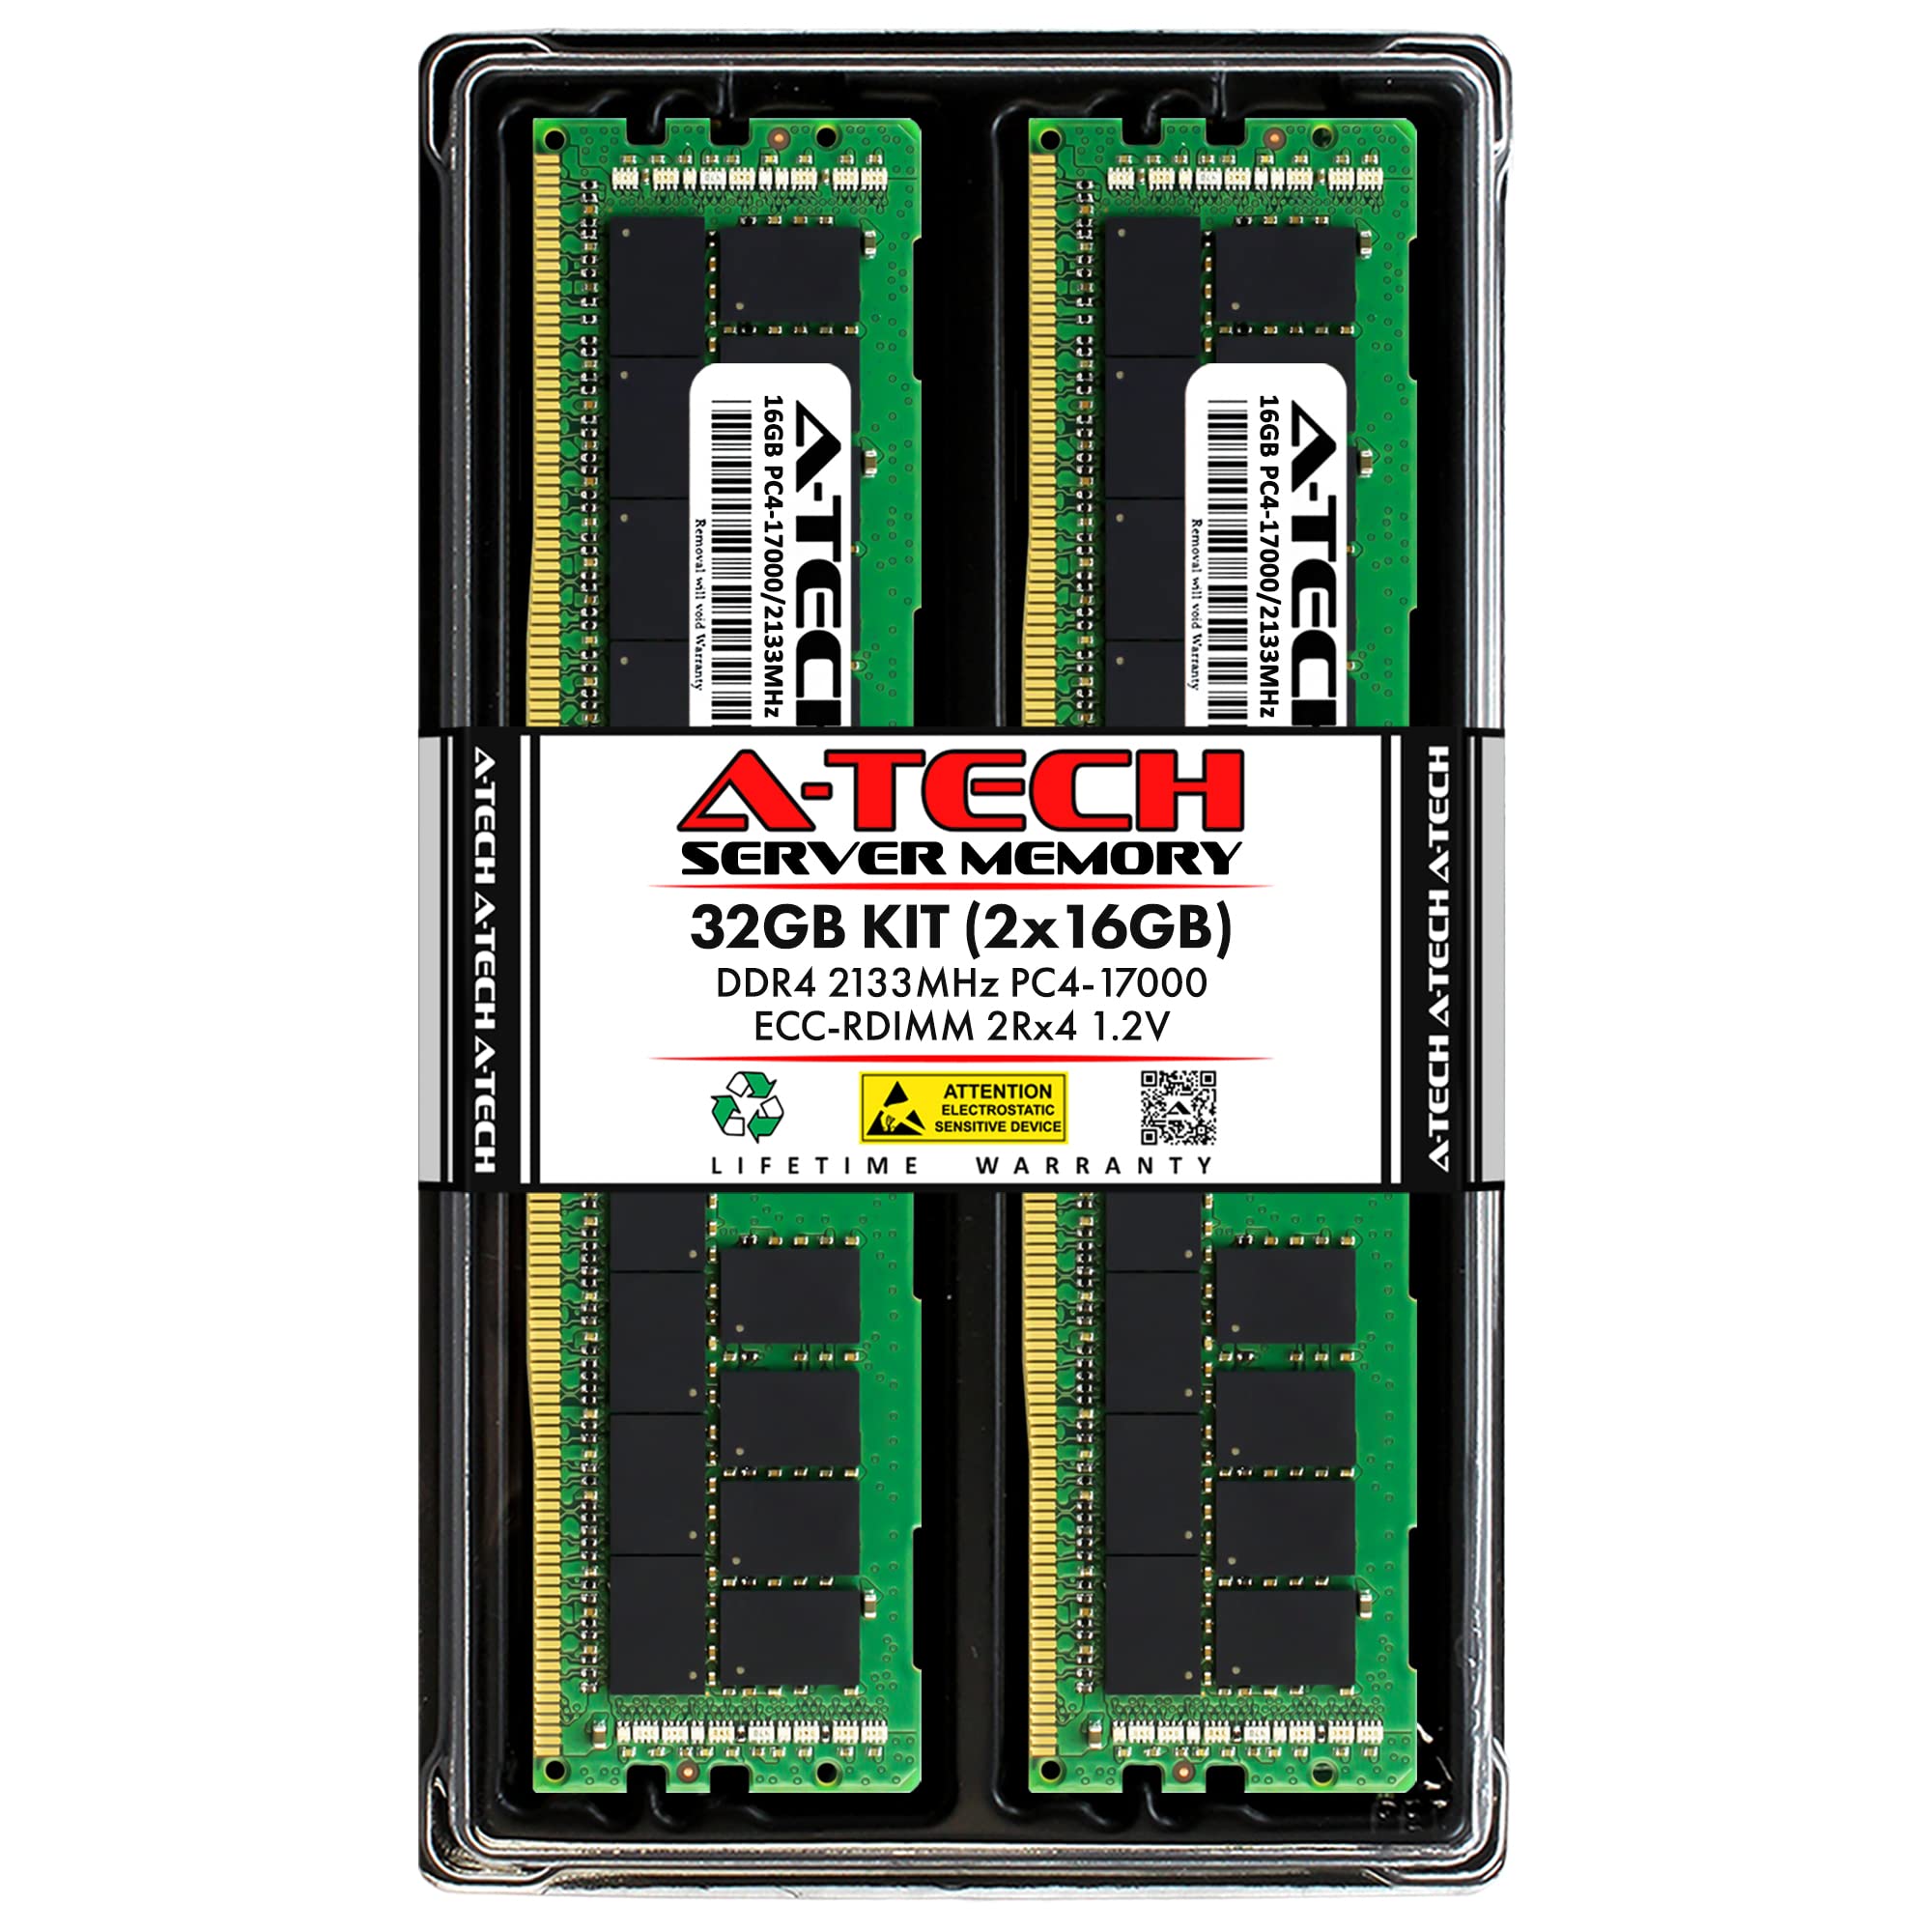 SALE／85%OFF】 Samsung Memory Bundle with 256GB x 32GB DDR4 PC4-21300  2666MHz C